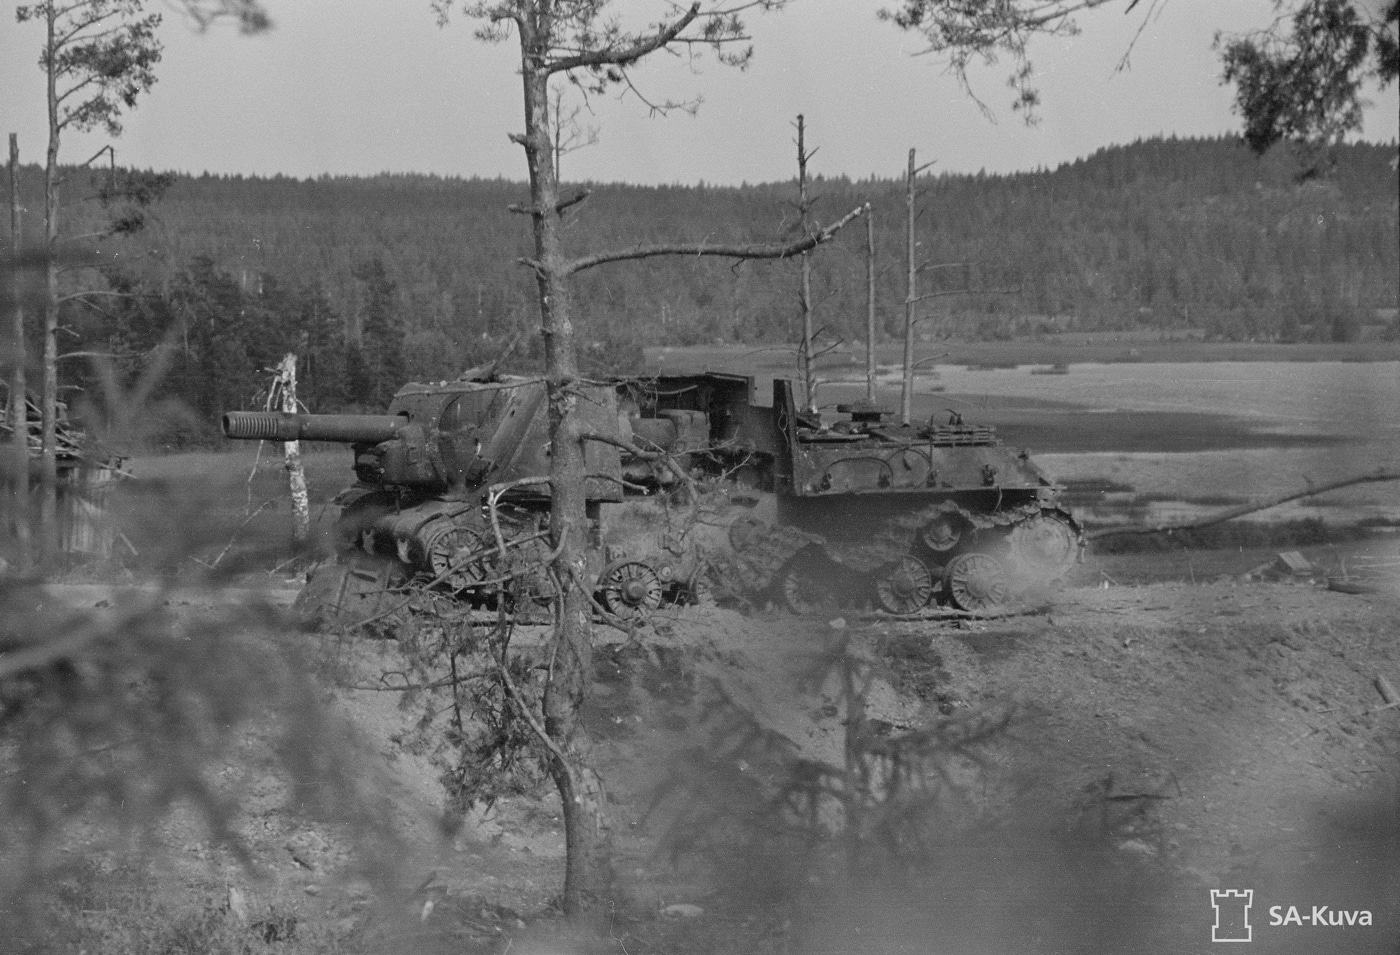 soviet isu-152 destroyed by a panzerfaust